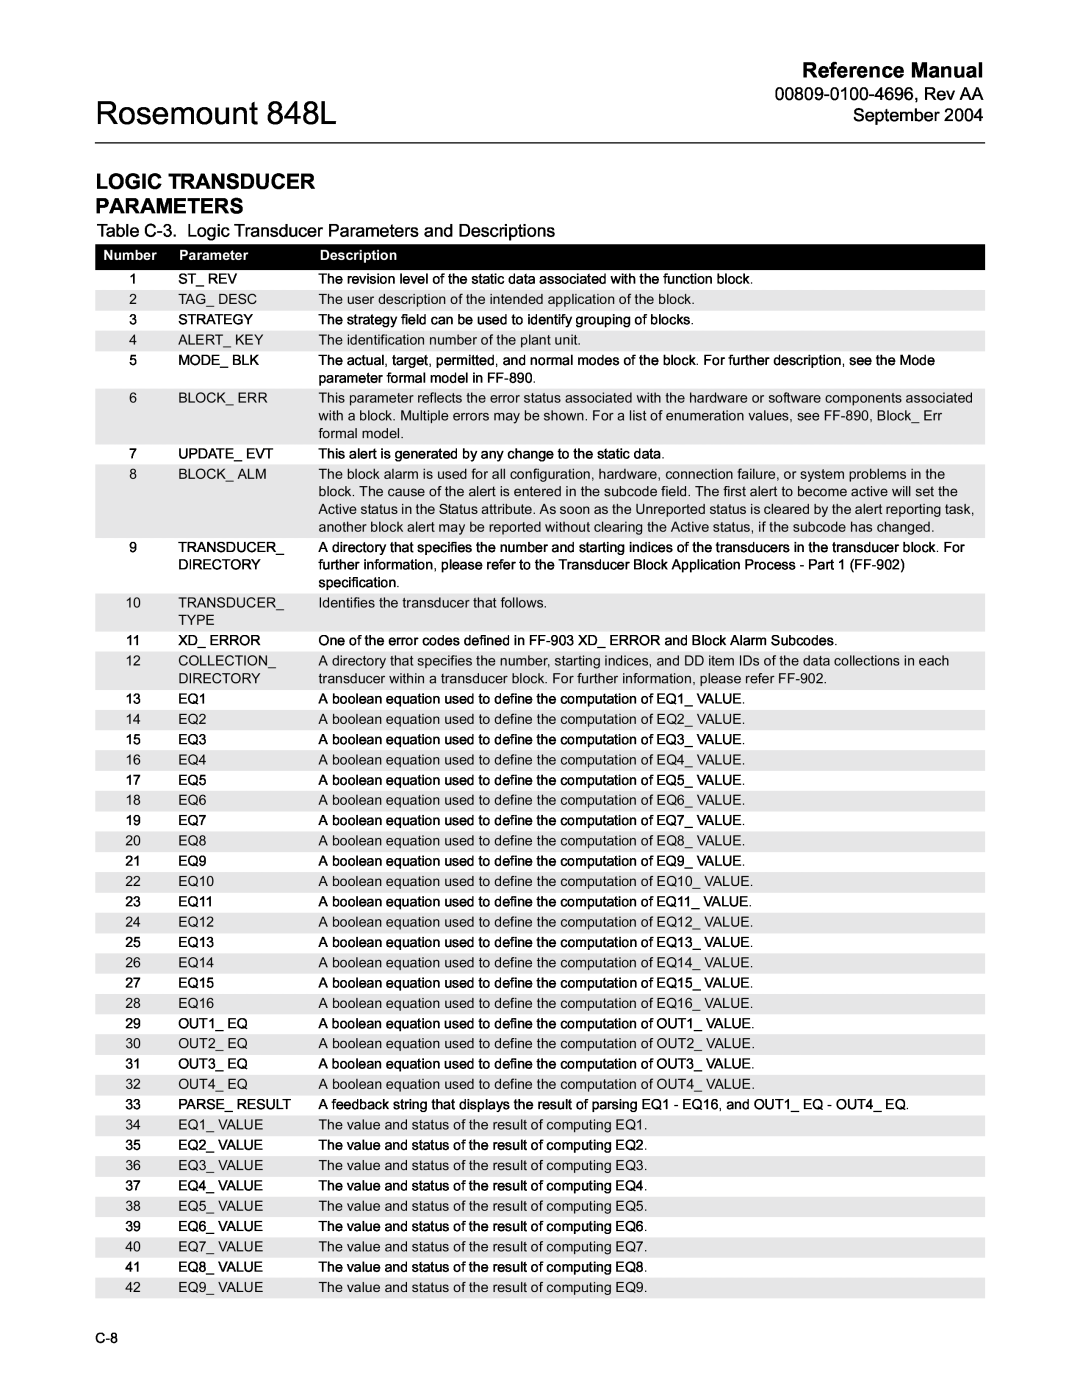 Emerson manual Logic Transducer Parameters, Rosemount 848L, Reference Manual, 00809-0100-4696,Rev AA September 